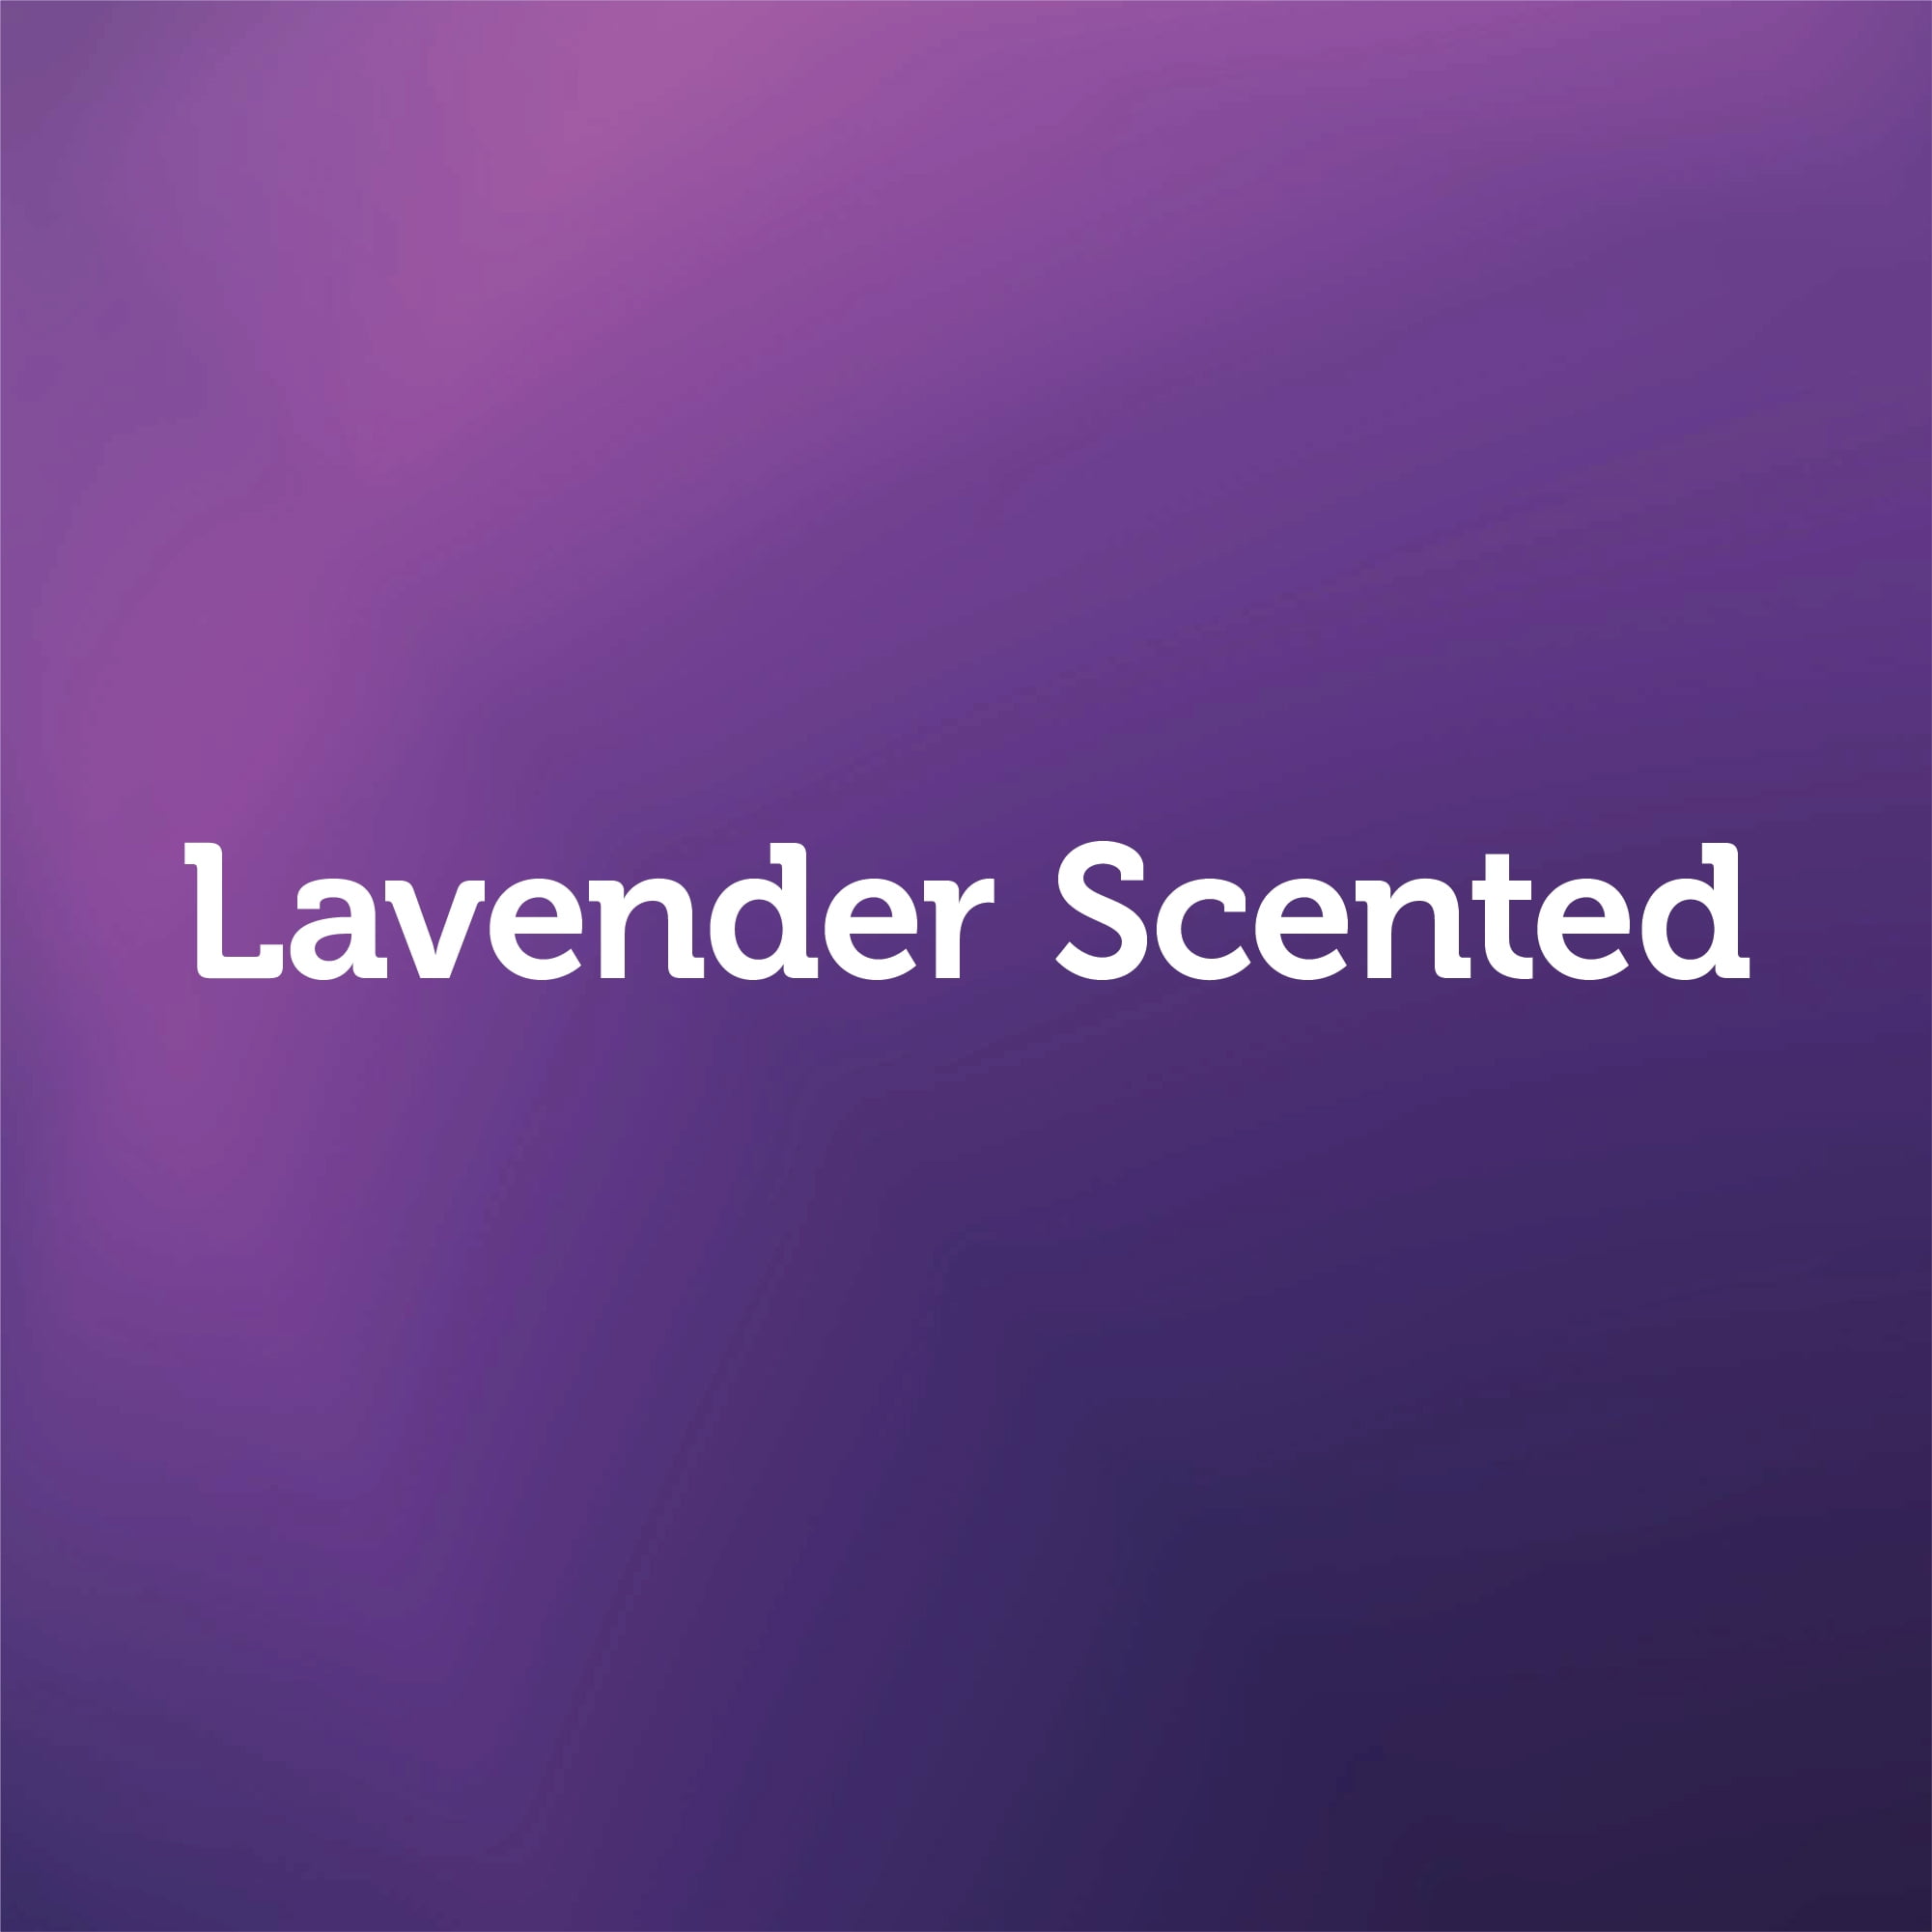 Enoz Lavender Scented Moth Ball Packets: Kills Clothes Moths, Carpet  Beetles, Eggs and Larvae (6 oz Bag, 6 Pack)